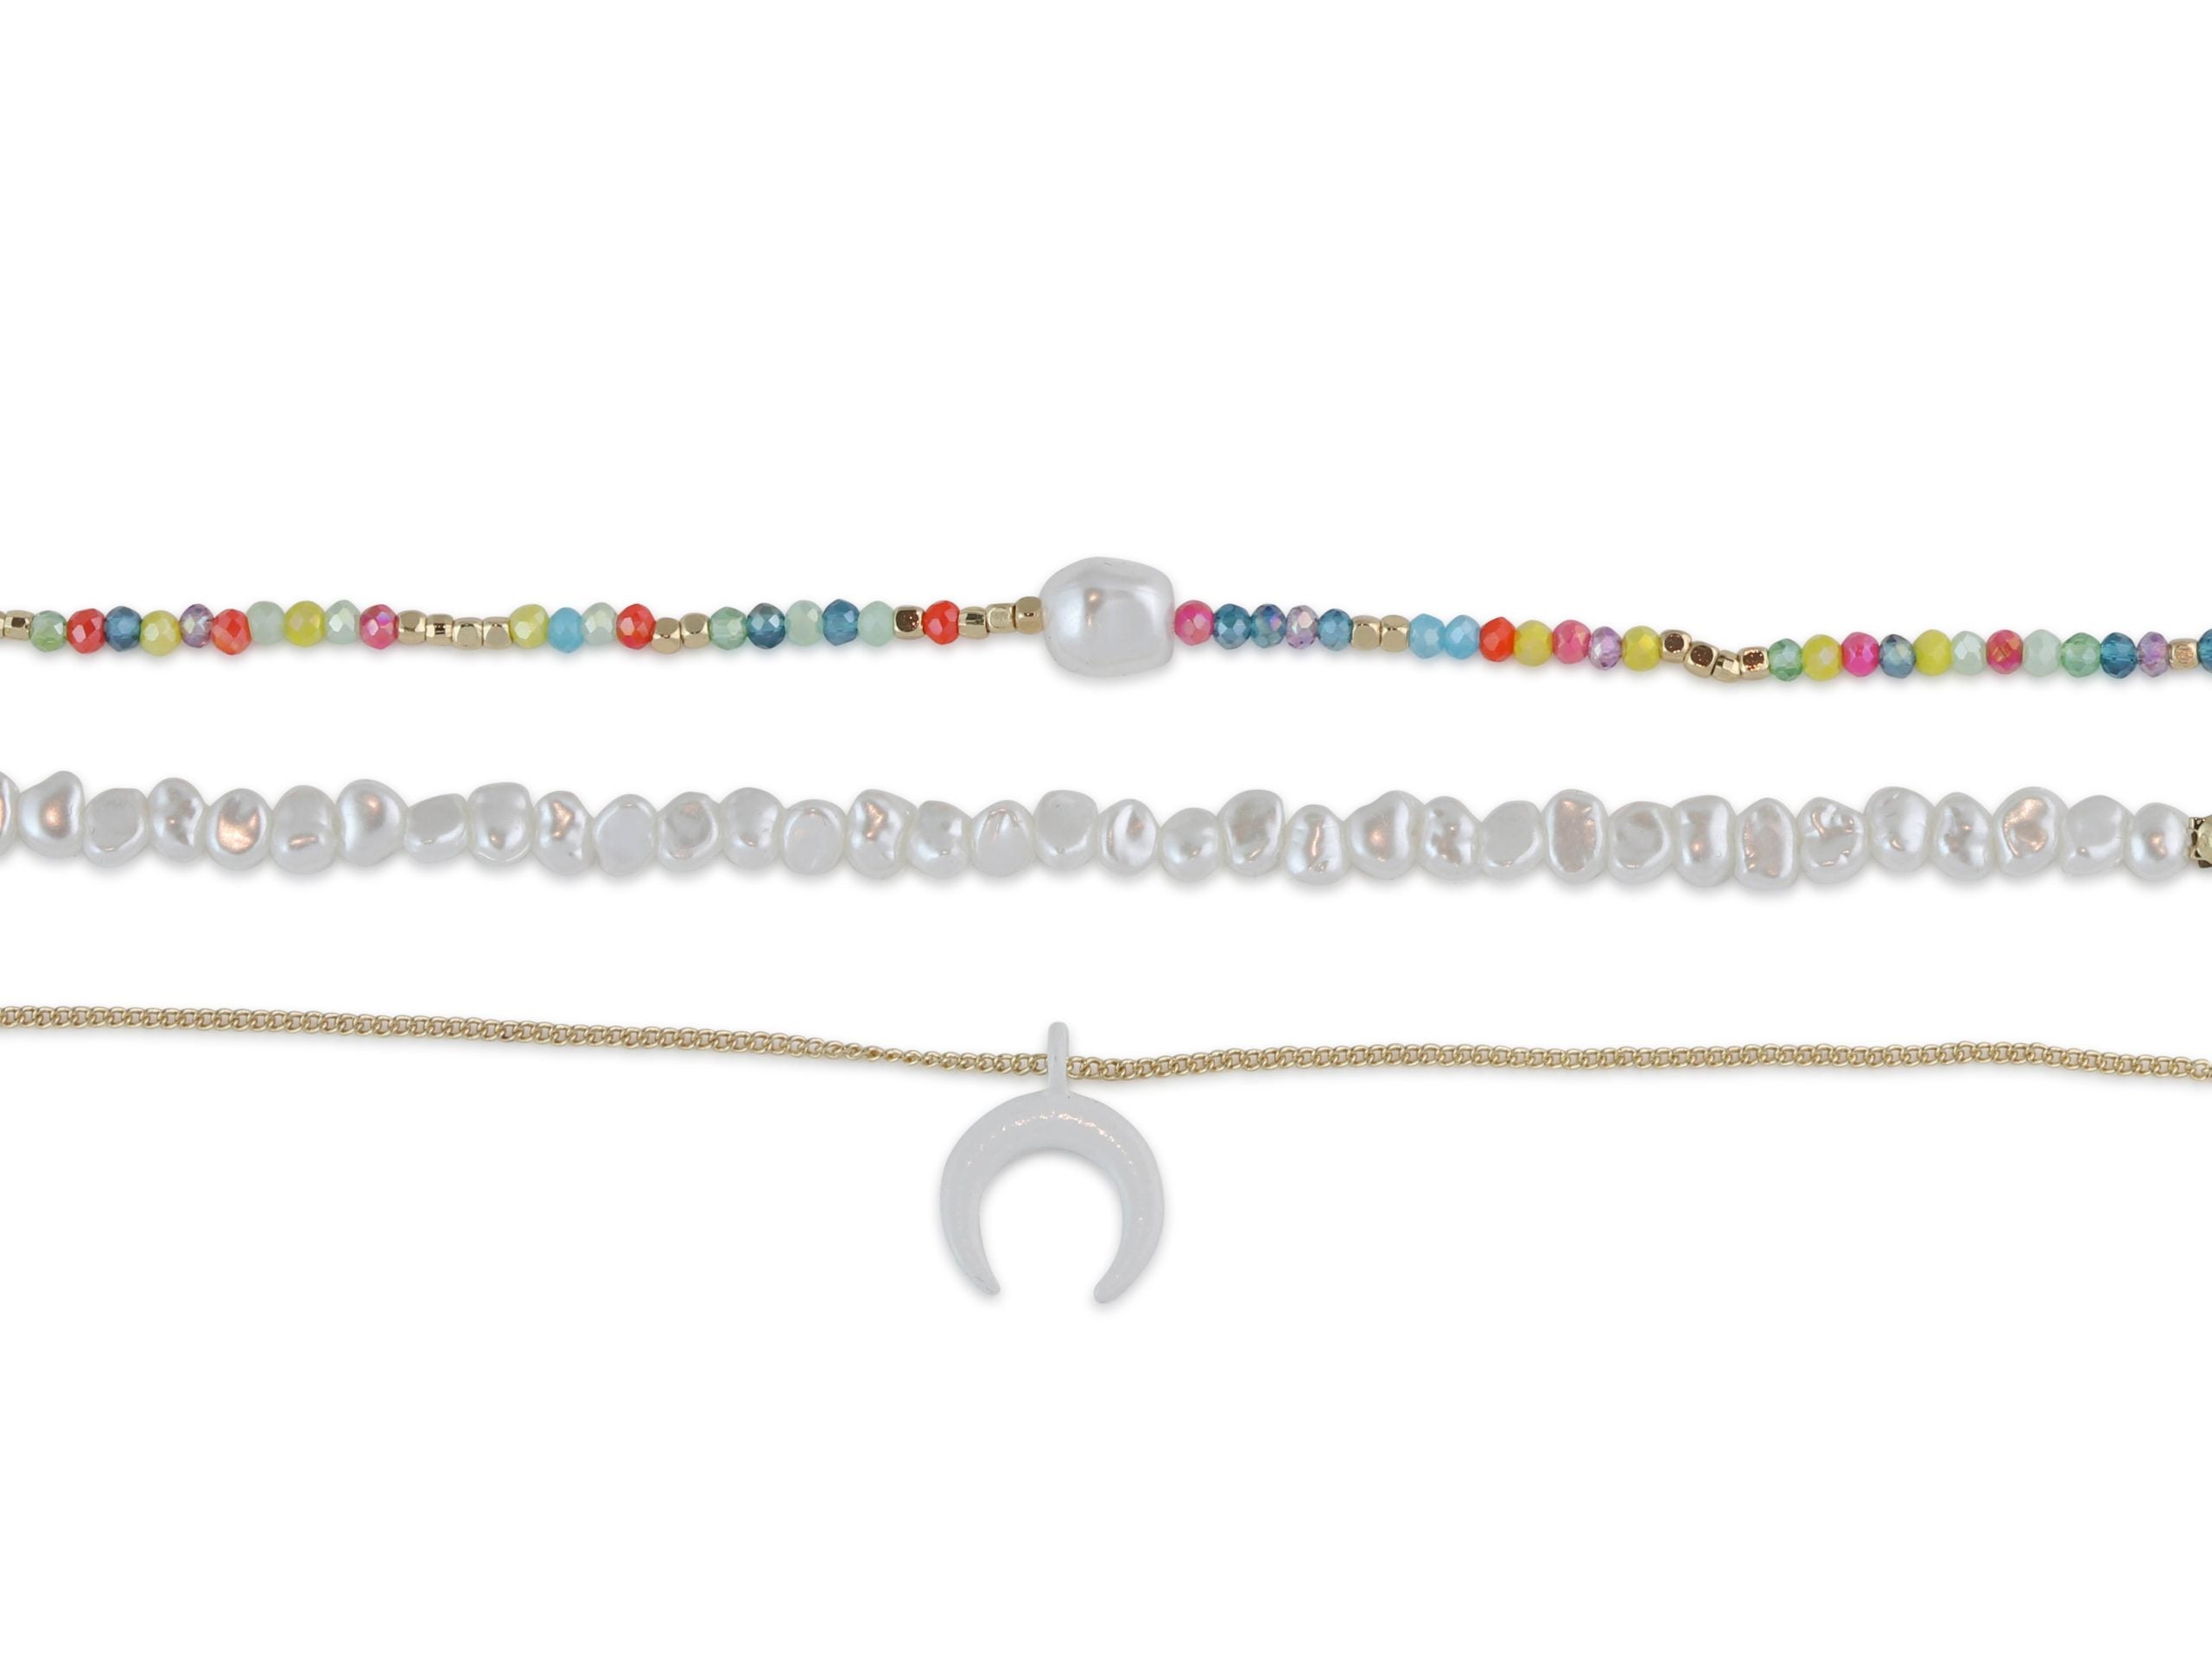 Multi Neon Agnes Bracelets - The Nancy Smillie Shop - Art, Jewellery & Designer Gifts Glasgow